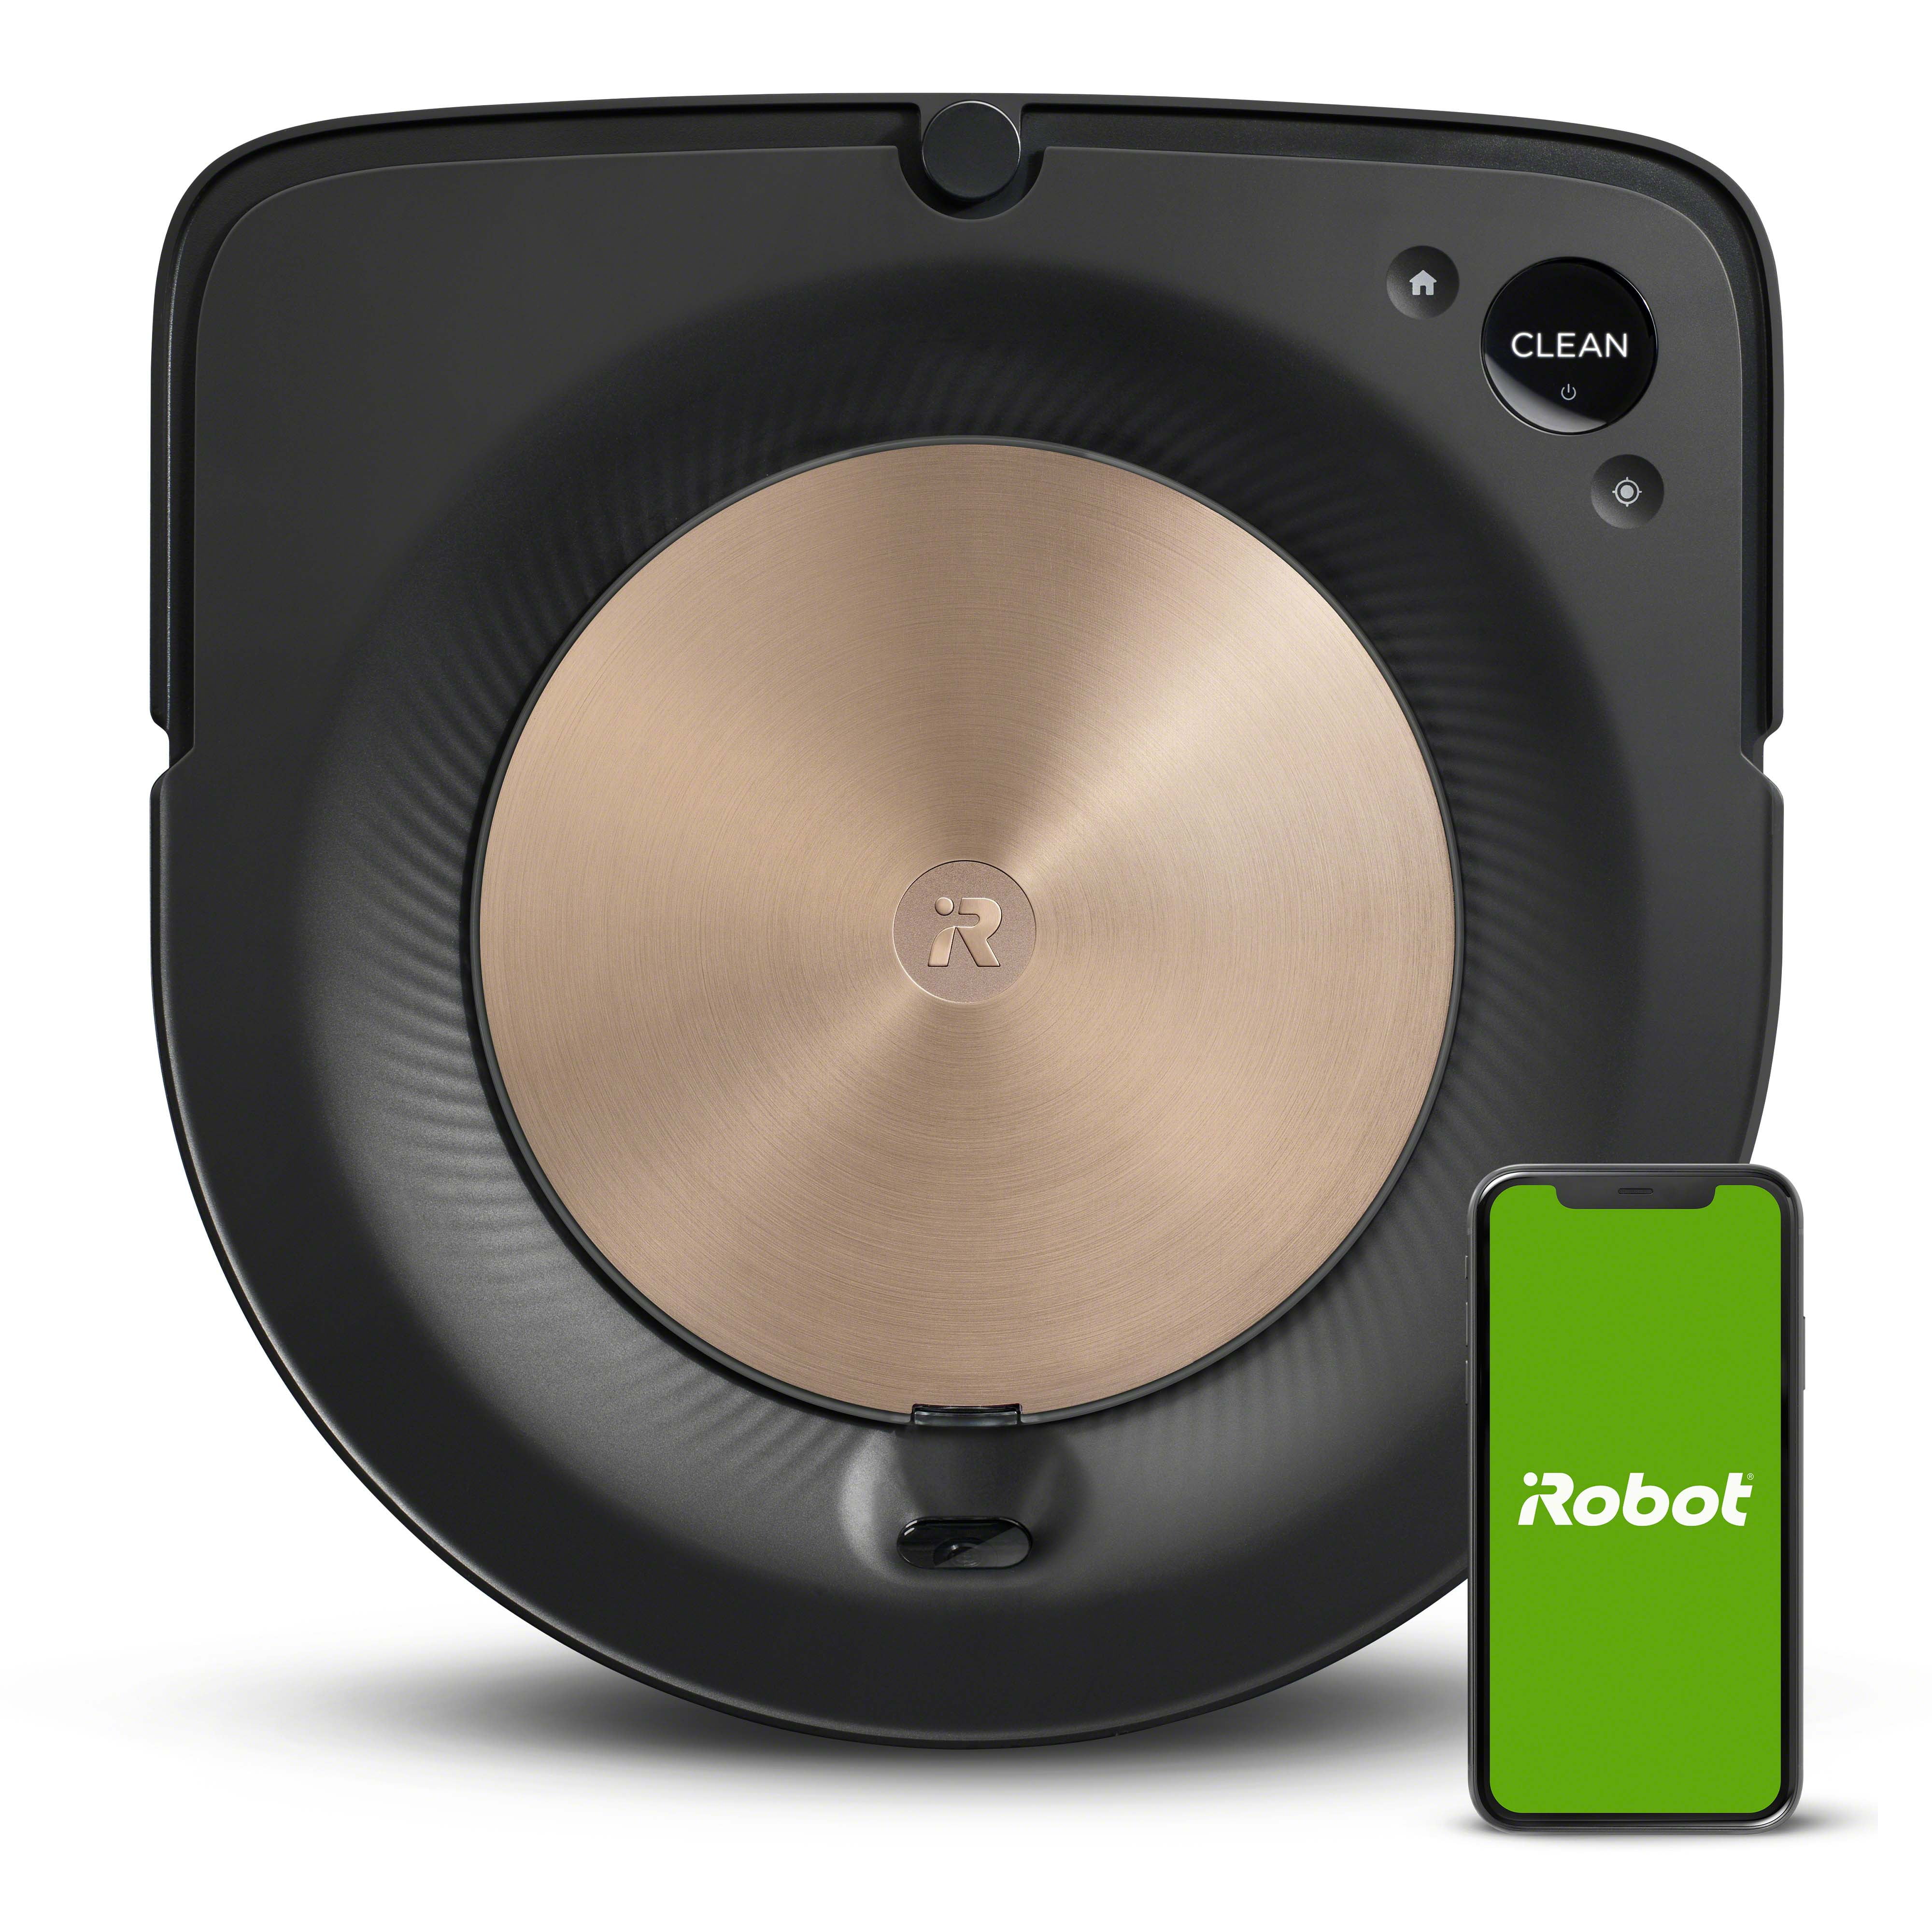 iRobot Roomba s9+ Robot Vacuum Review